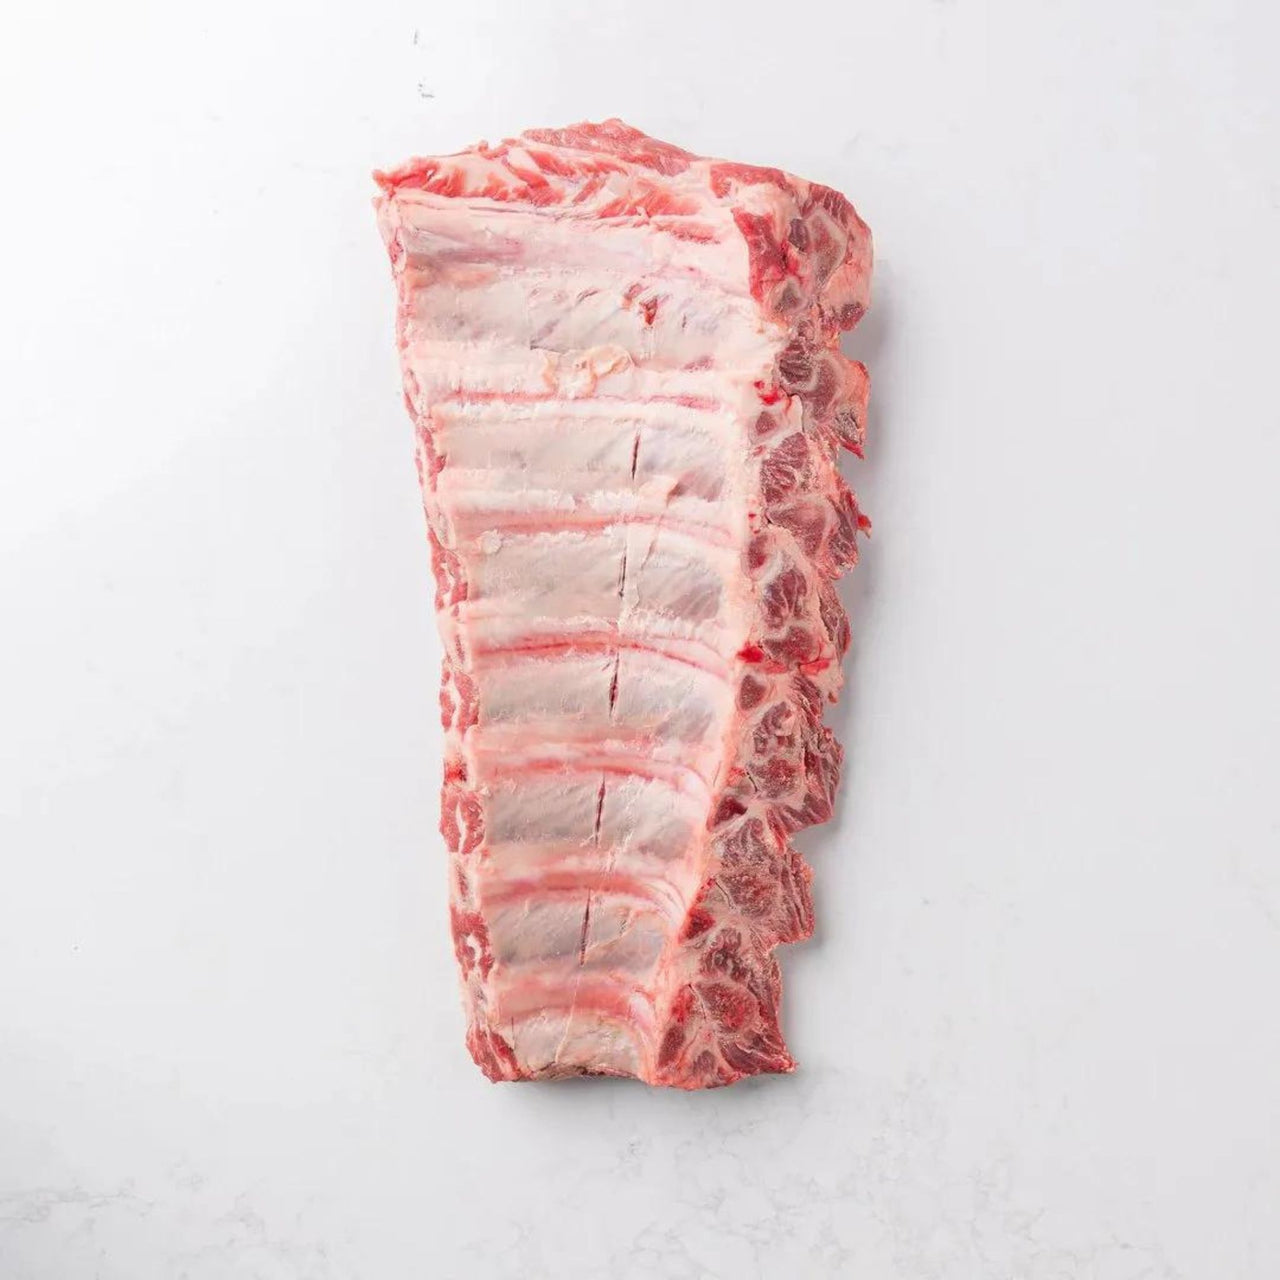 Image of F2F Premium Beef Ribs 4 Racks | 15lbs avg. - 1 x 8 Kilos